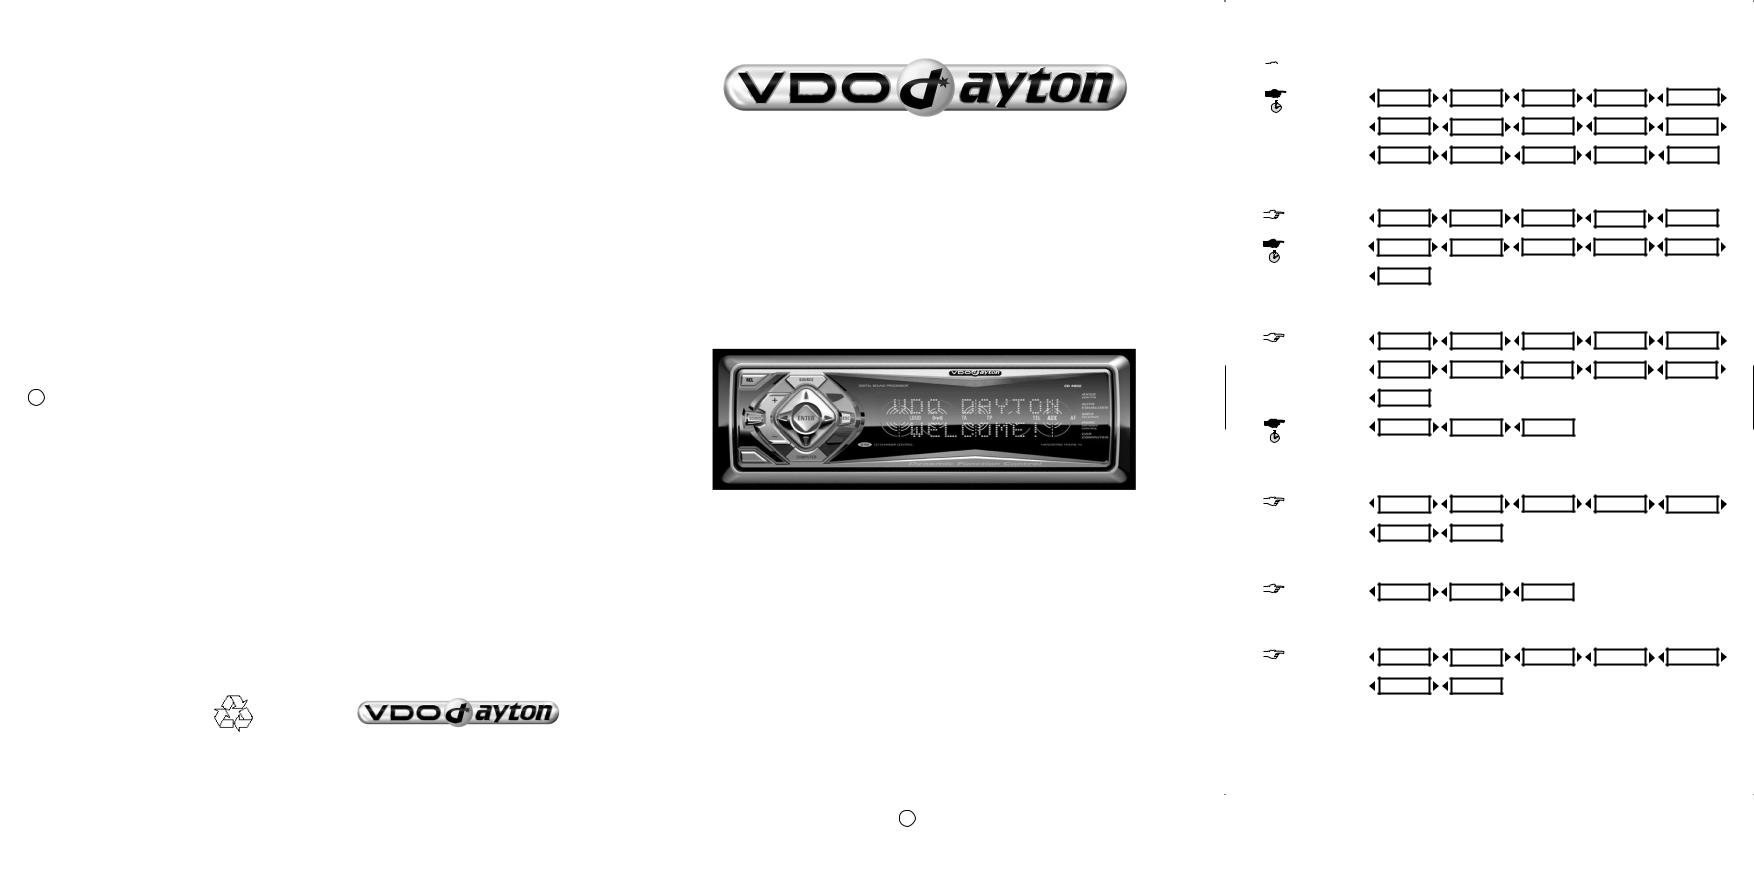 VDO DAYTON CD 4402, CD 4502, CR 4402 User Manual